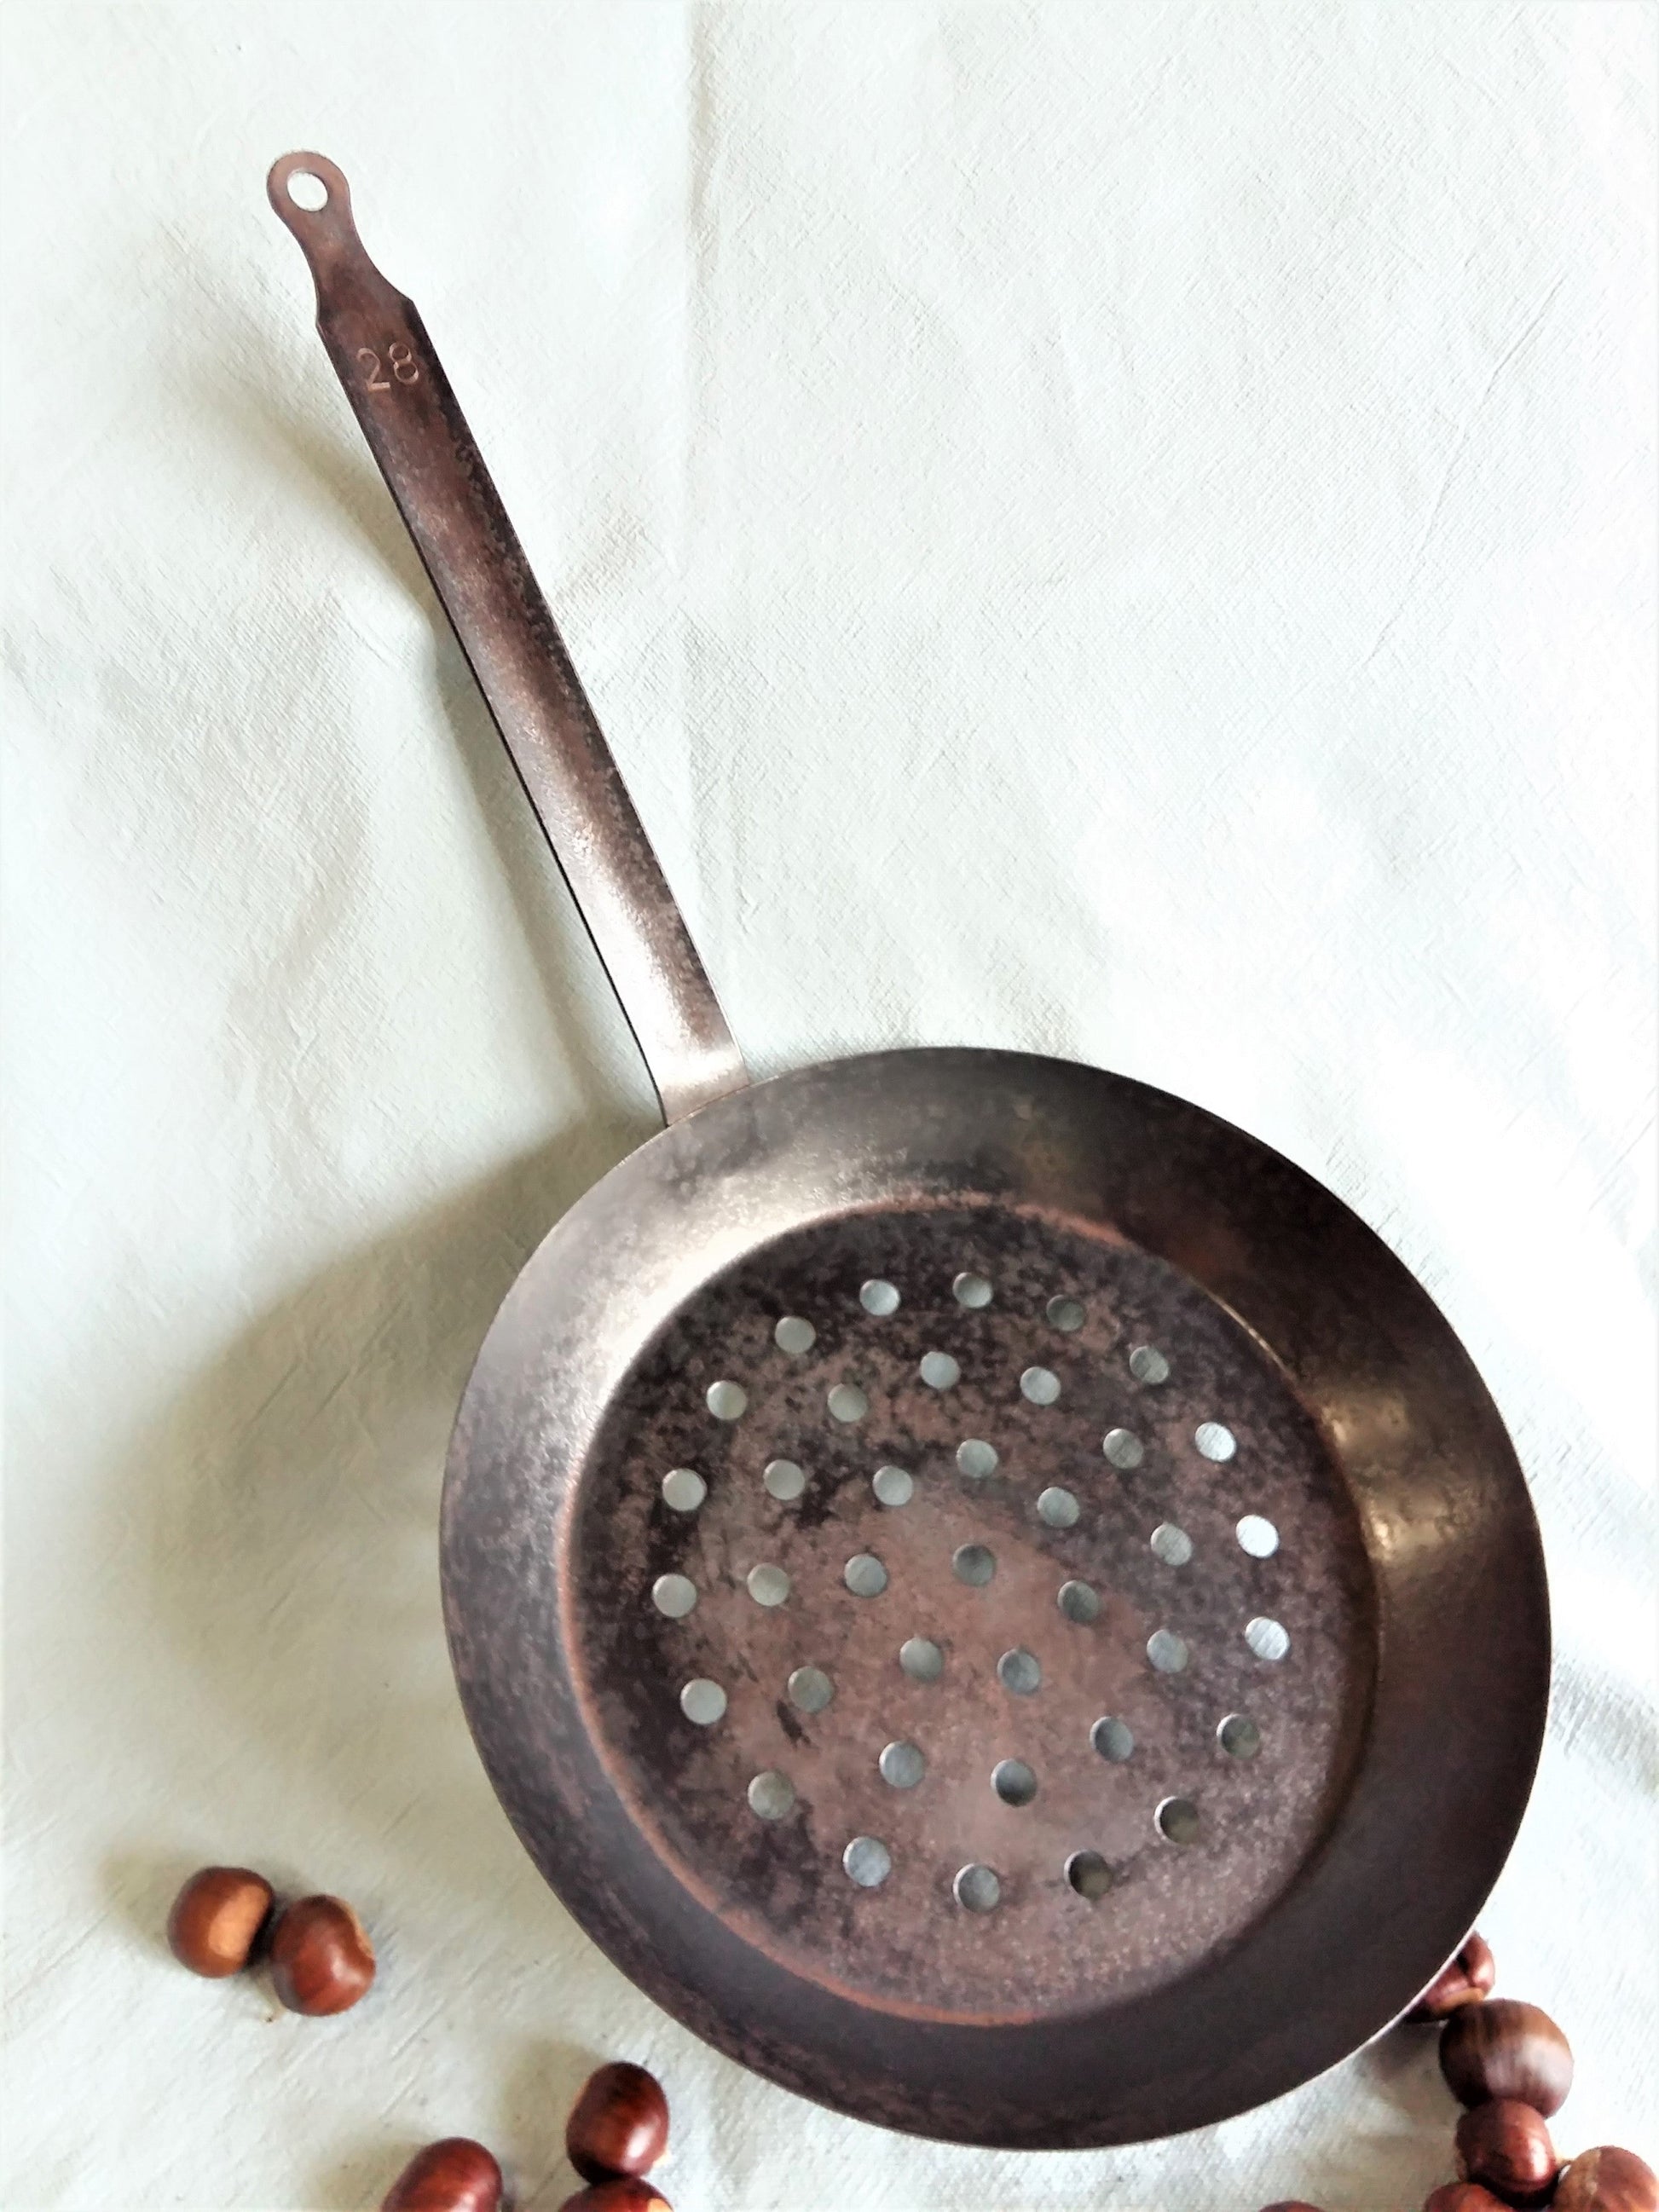 Chestnut Roasting Pan. Vintage Pan for Roasting Chestnuts.